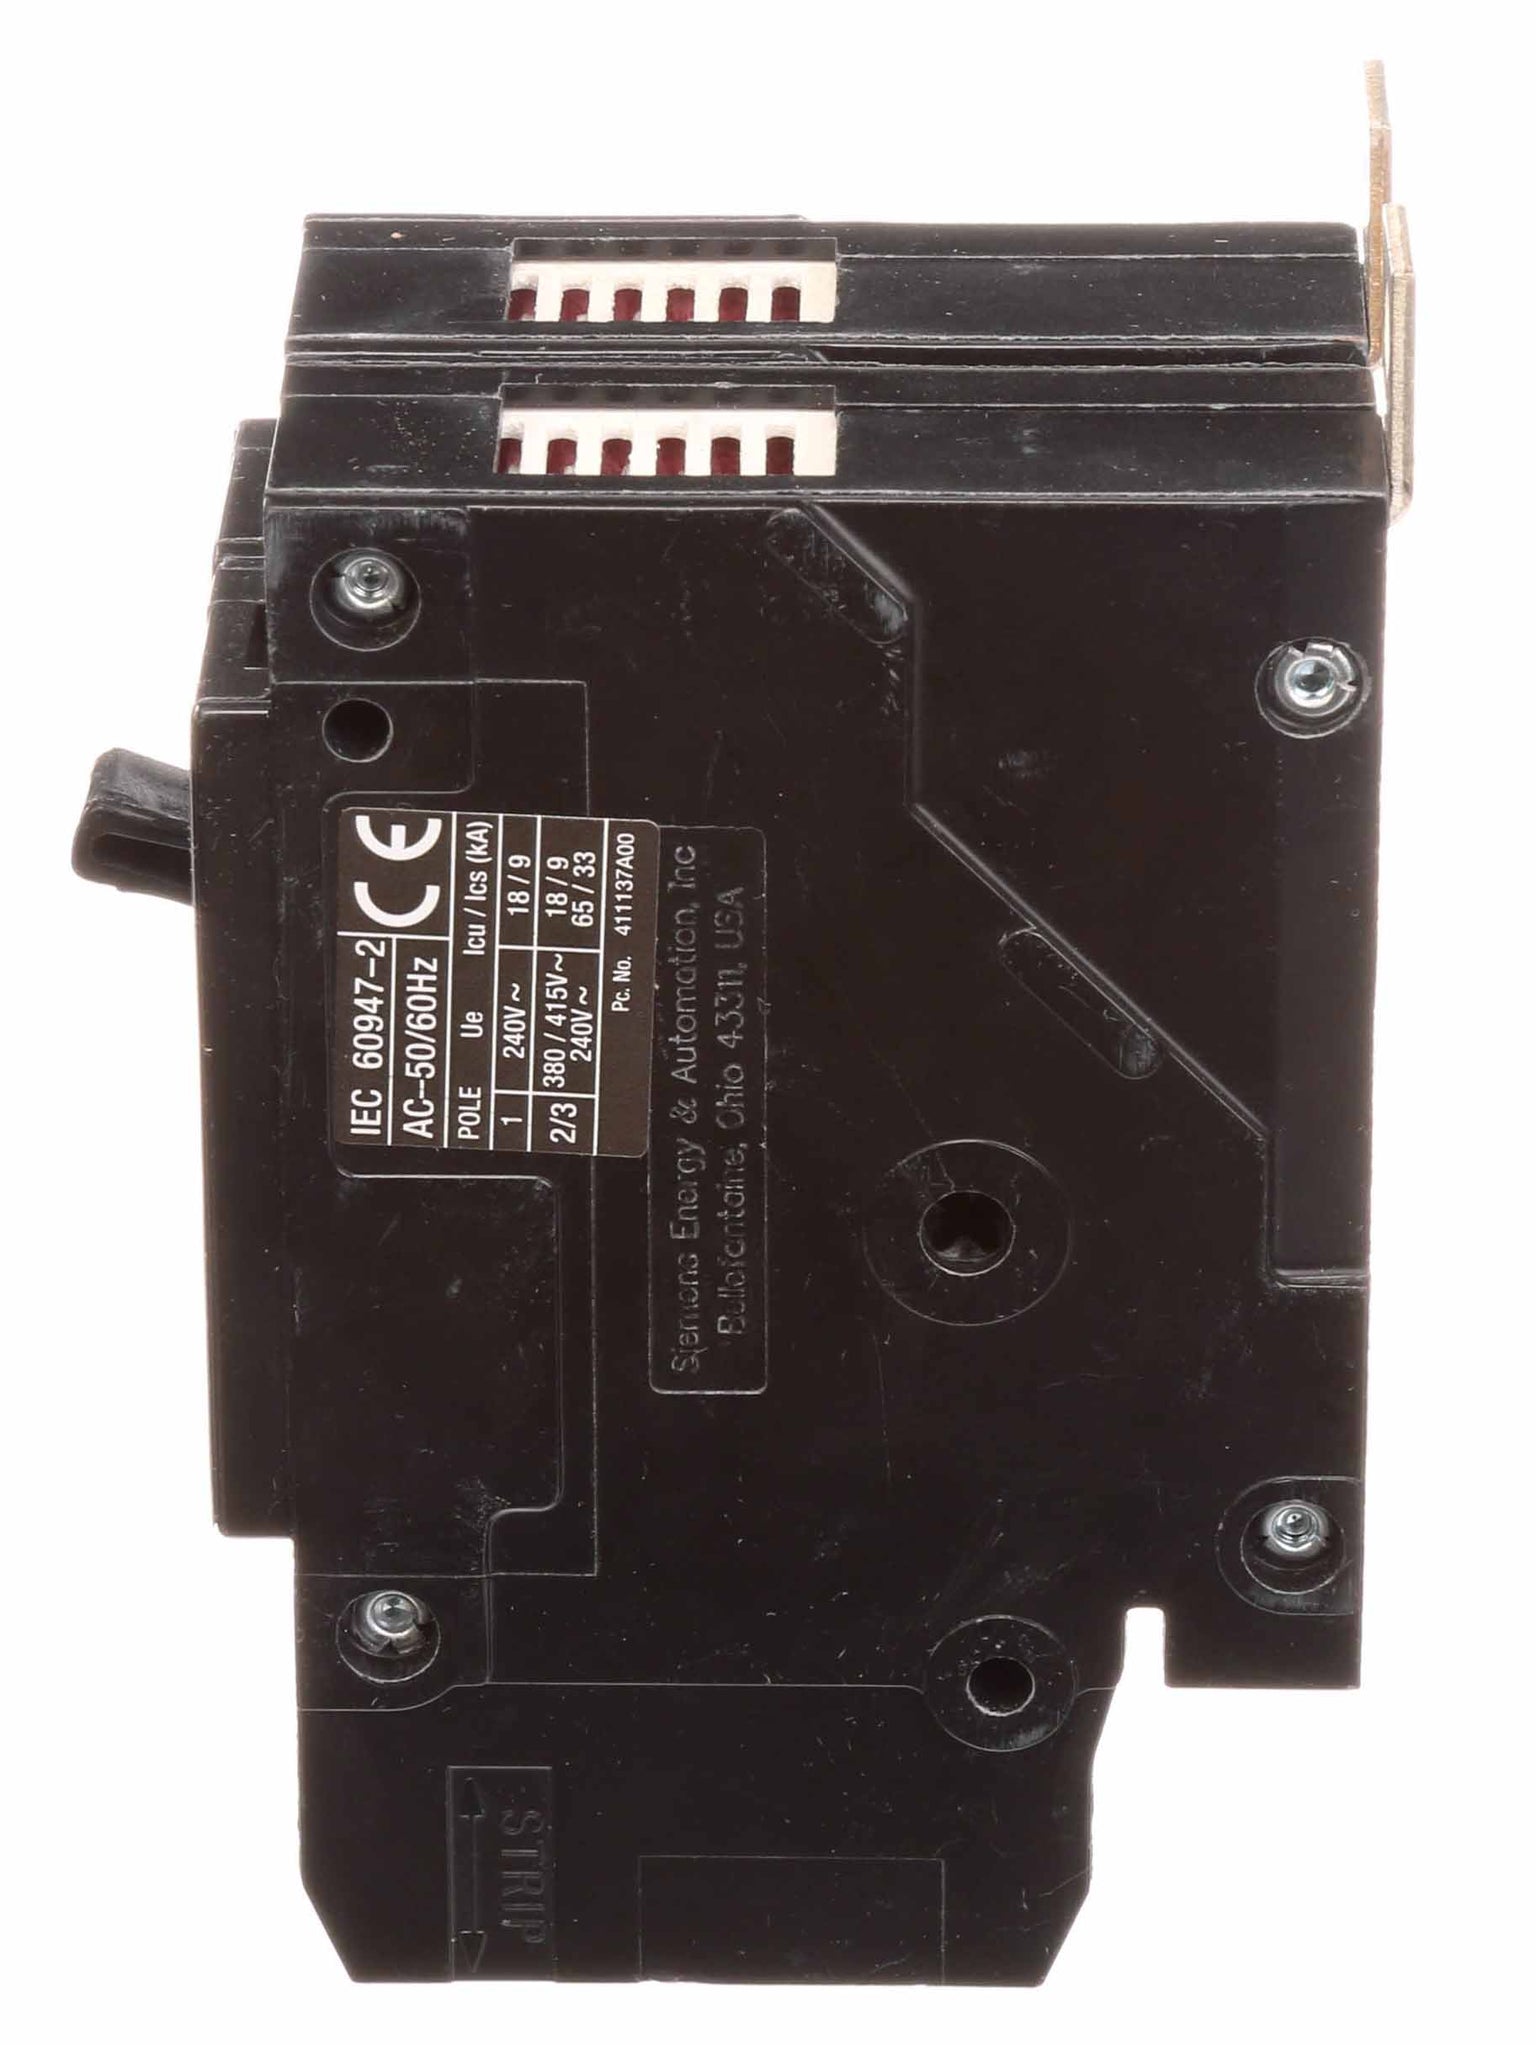 BQD250 - Siemens - 50 Amp Molded Case Circuit Breaker